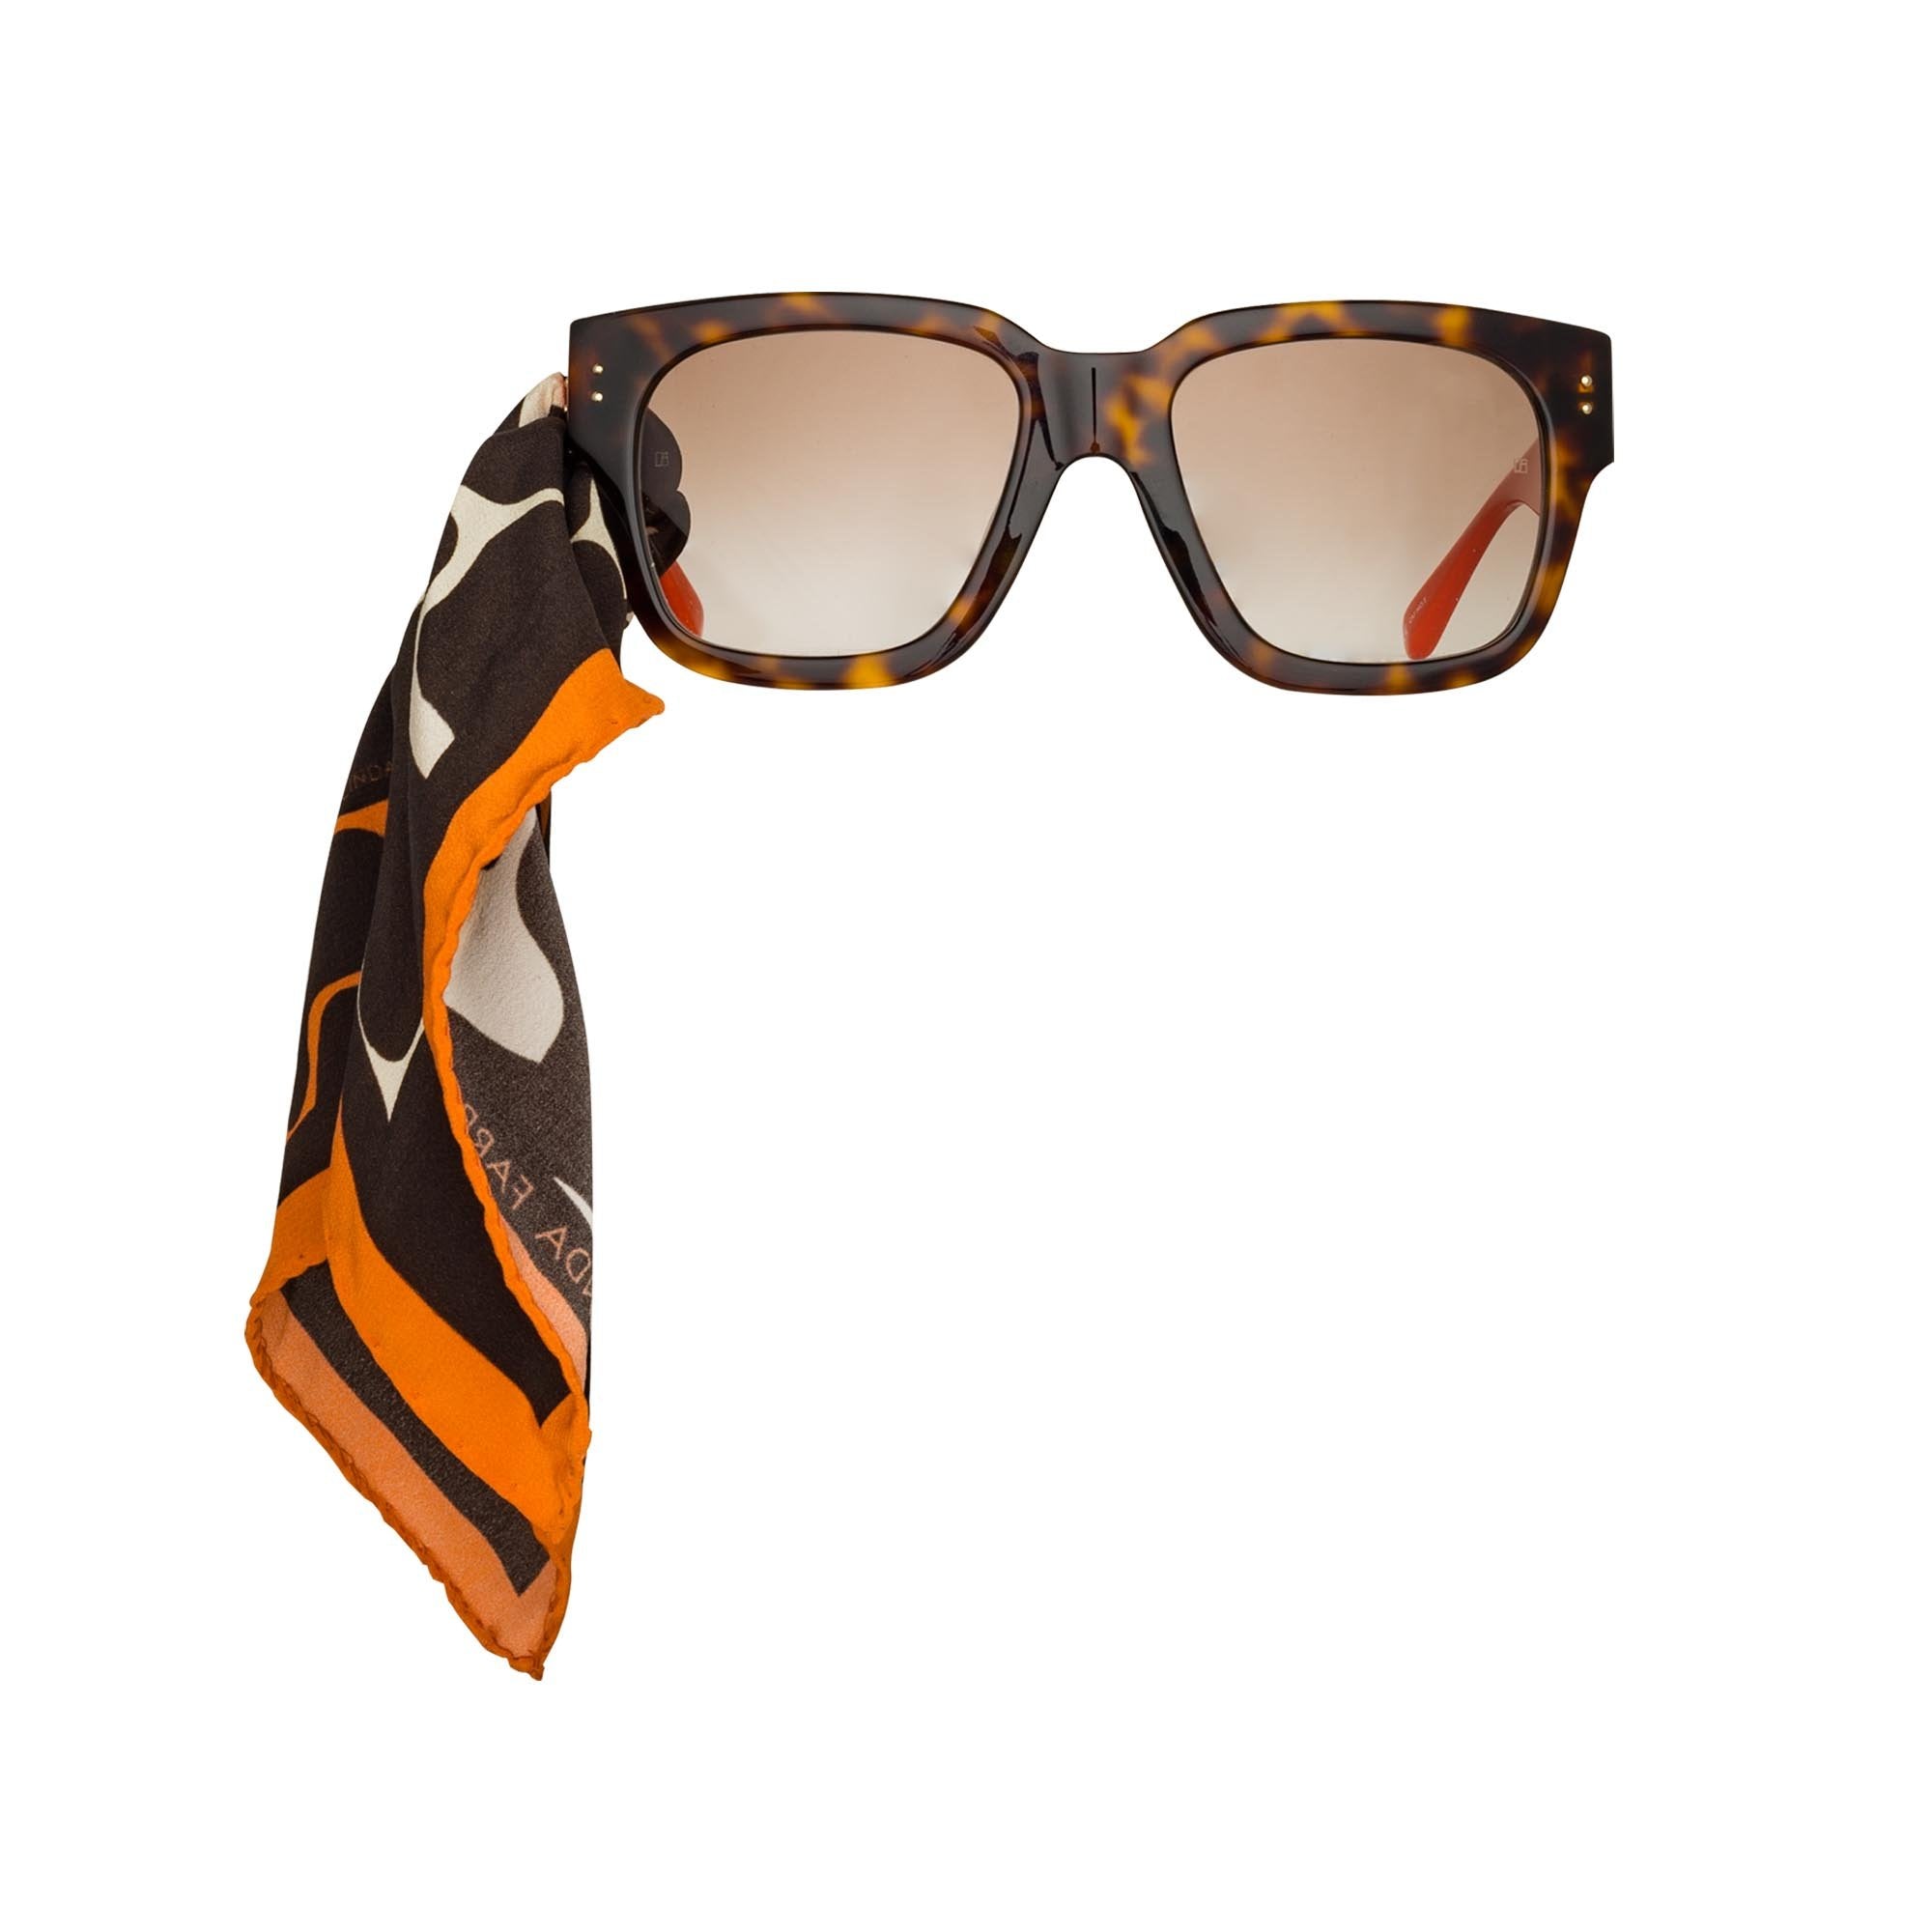 Color_LFL1001C3SUN - Amber D-Frame Sunglasses in Tortoiseshell